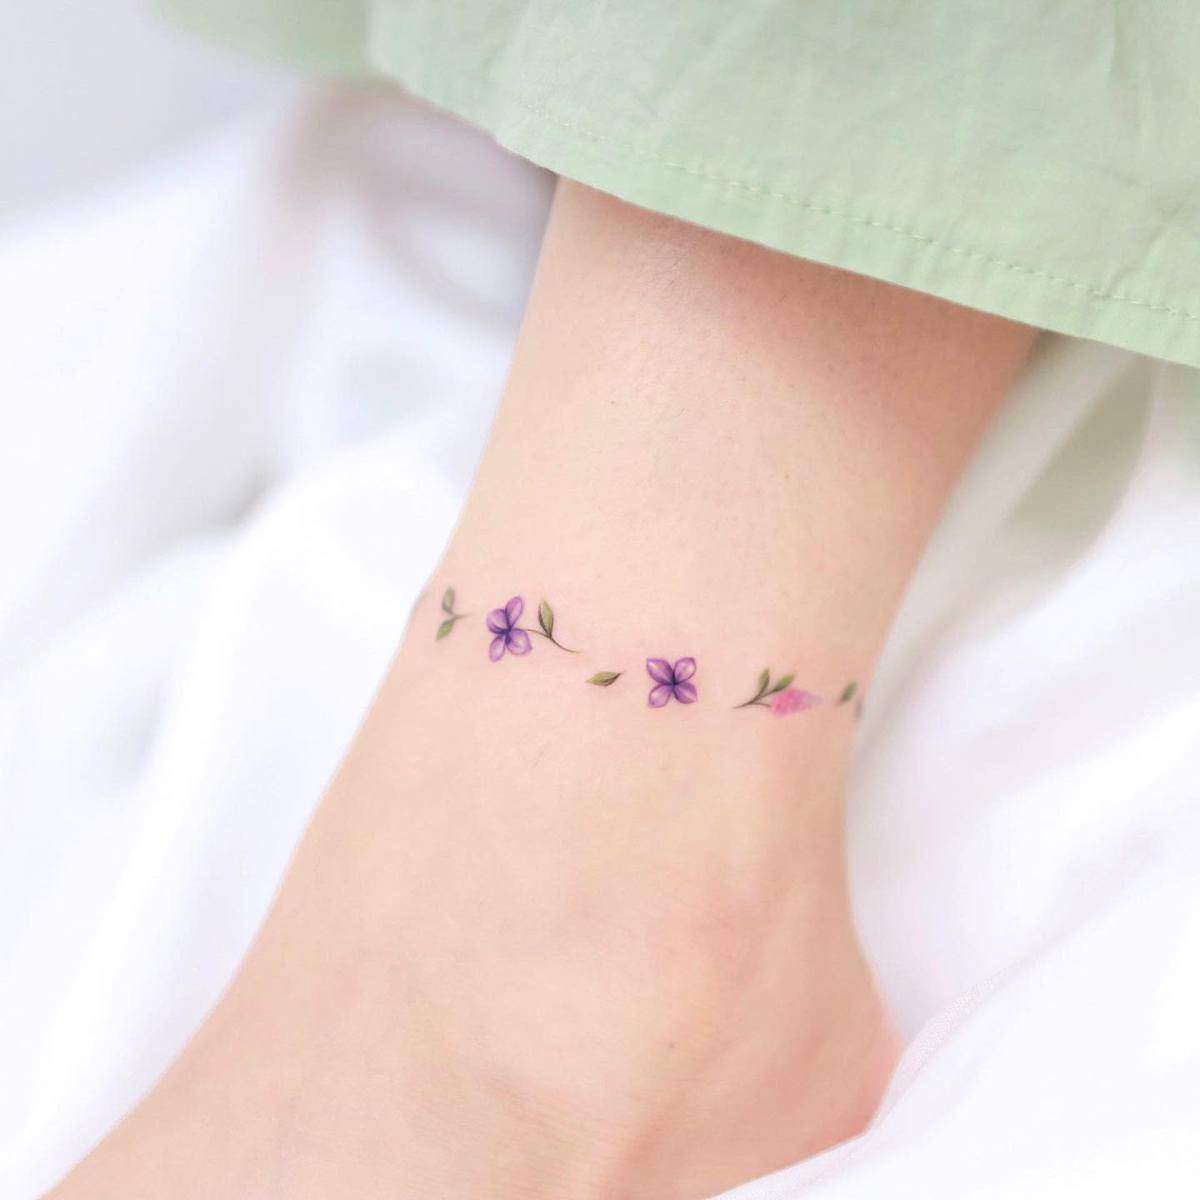 boho rose flower tramp stamp temporary tattoo foot tattoo designs | eBay